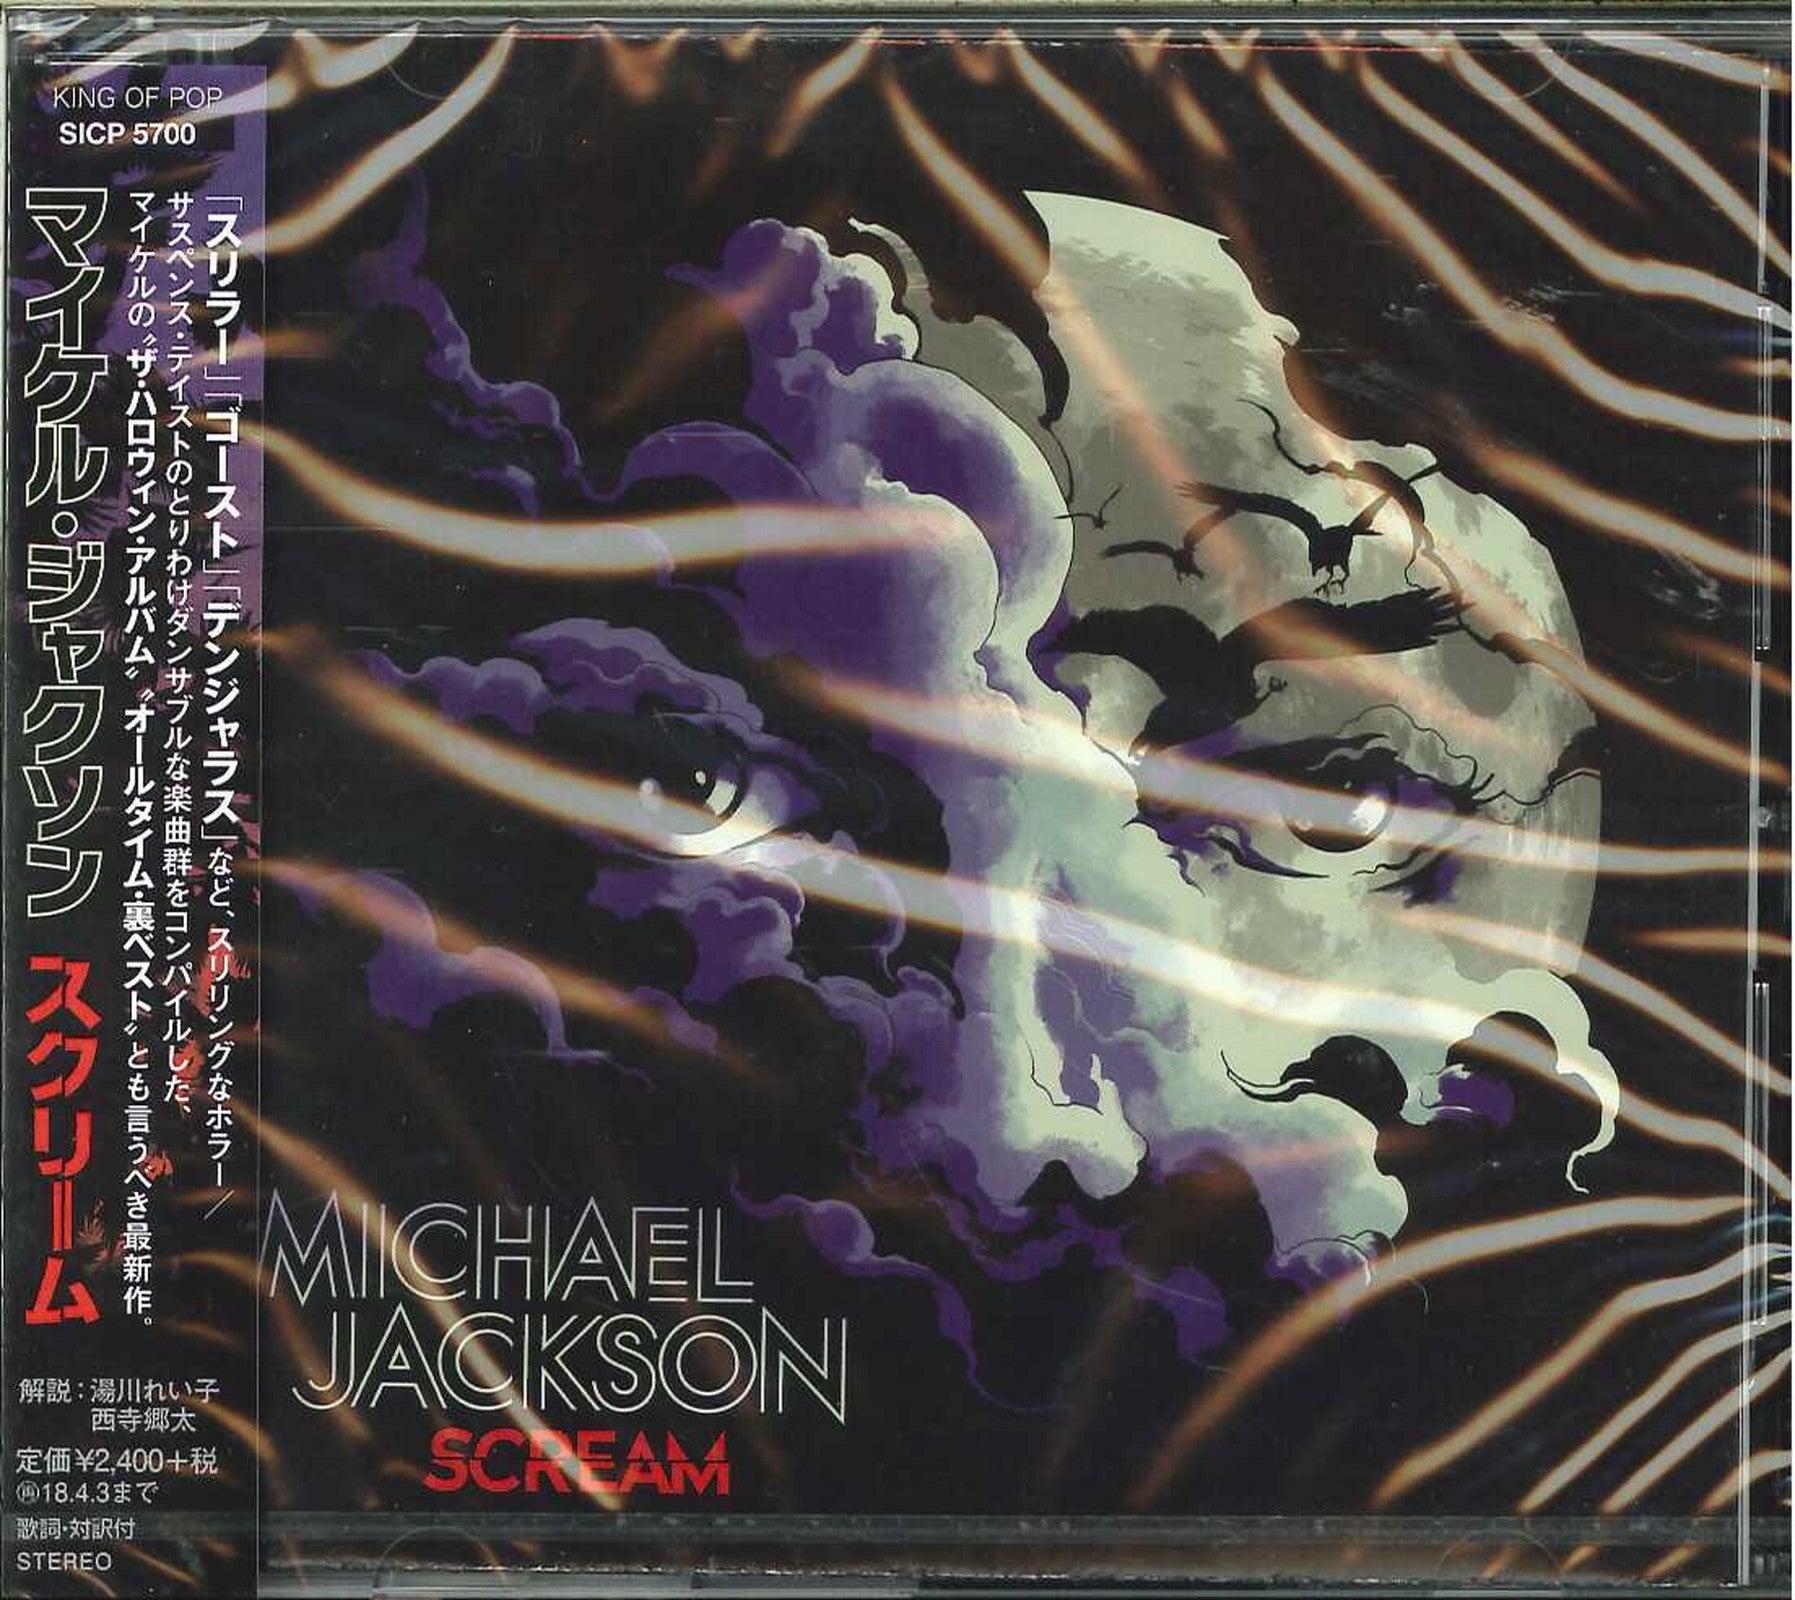 Jackson - Scream - Japan CDBonus Track - CDs Vinyl Japan Store